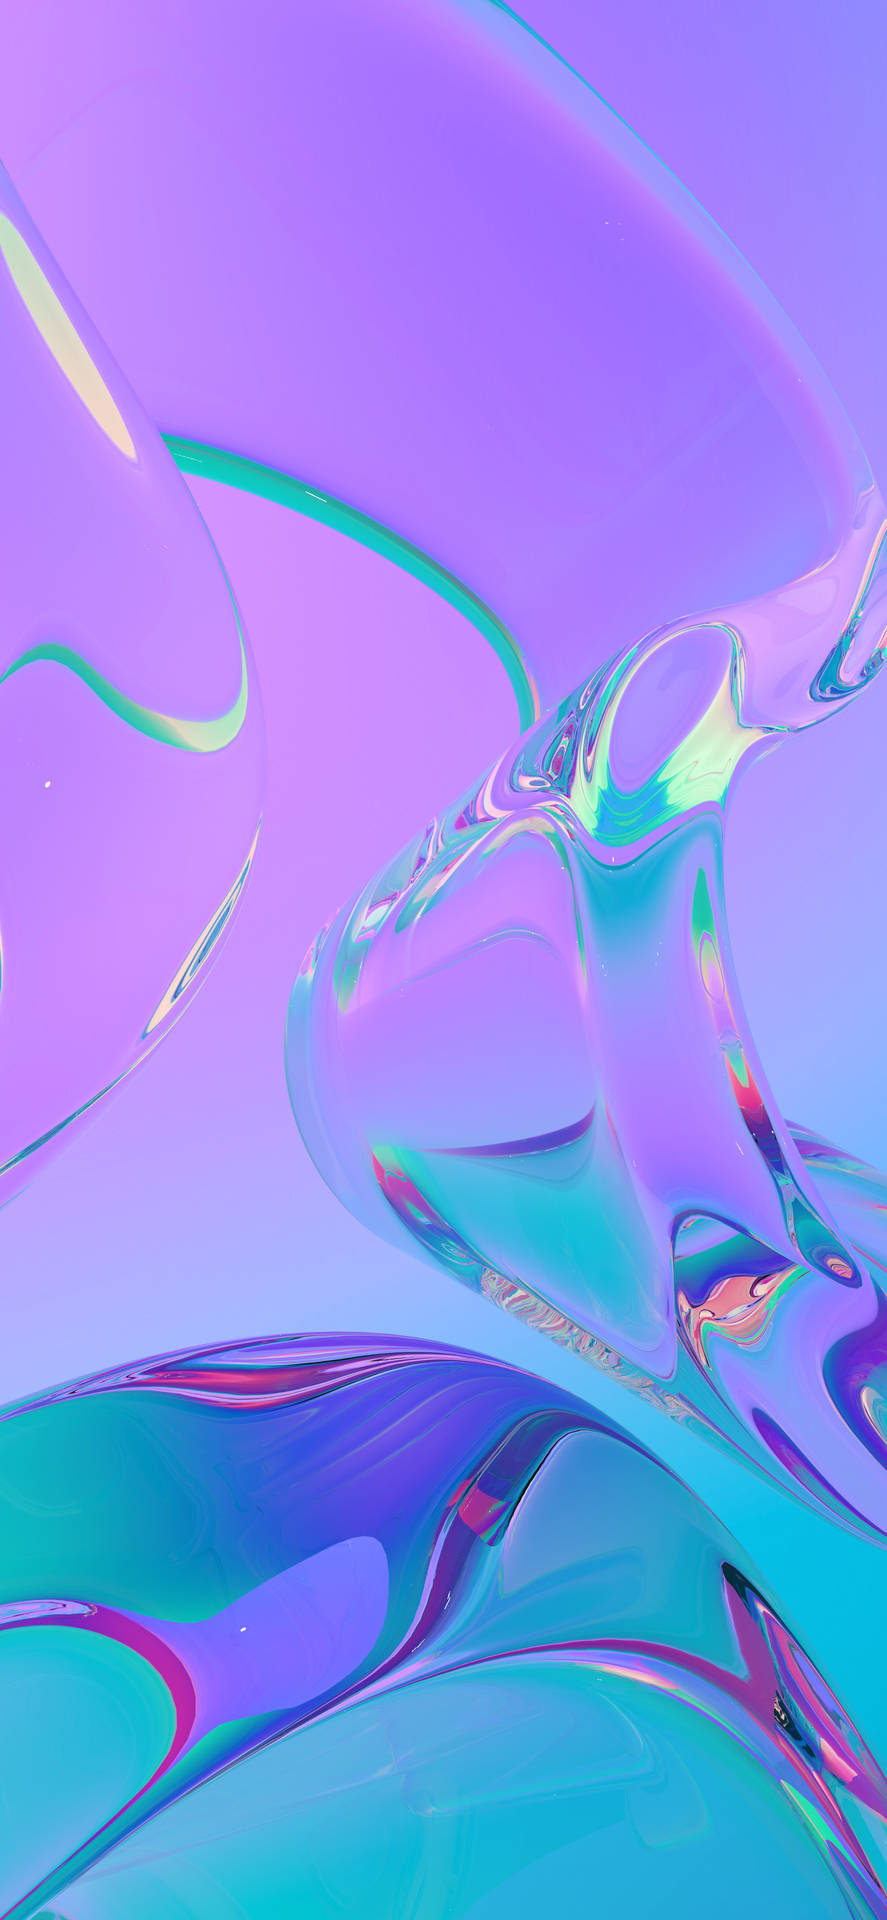 Close-up Violet Liquid Surface Mobile 3d Background